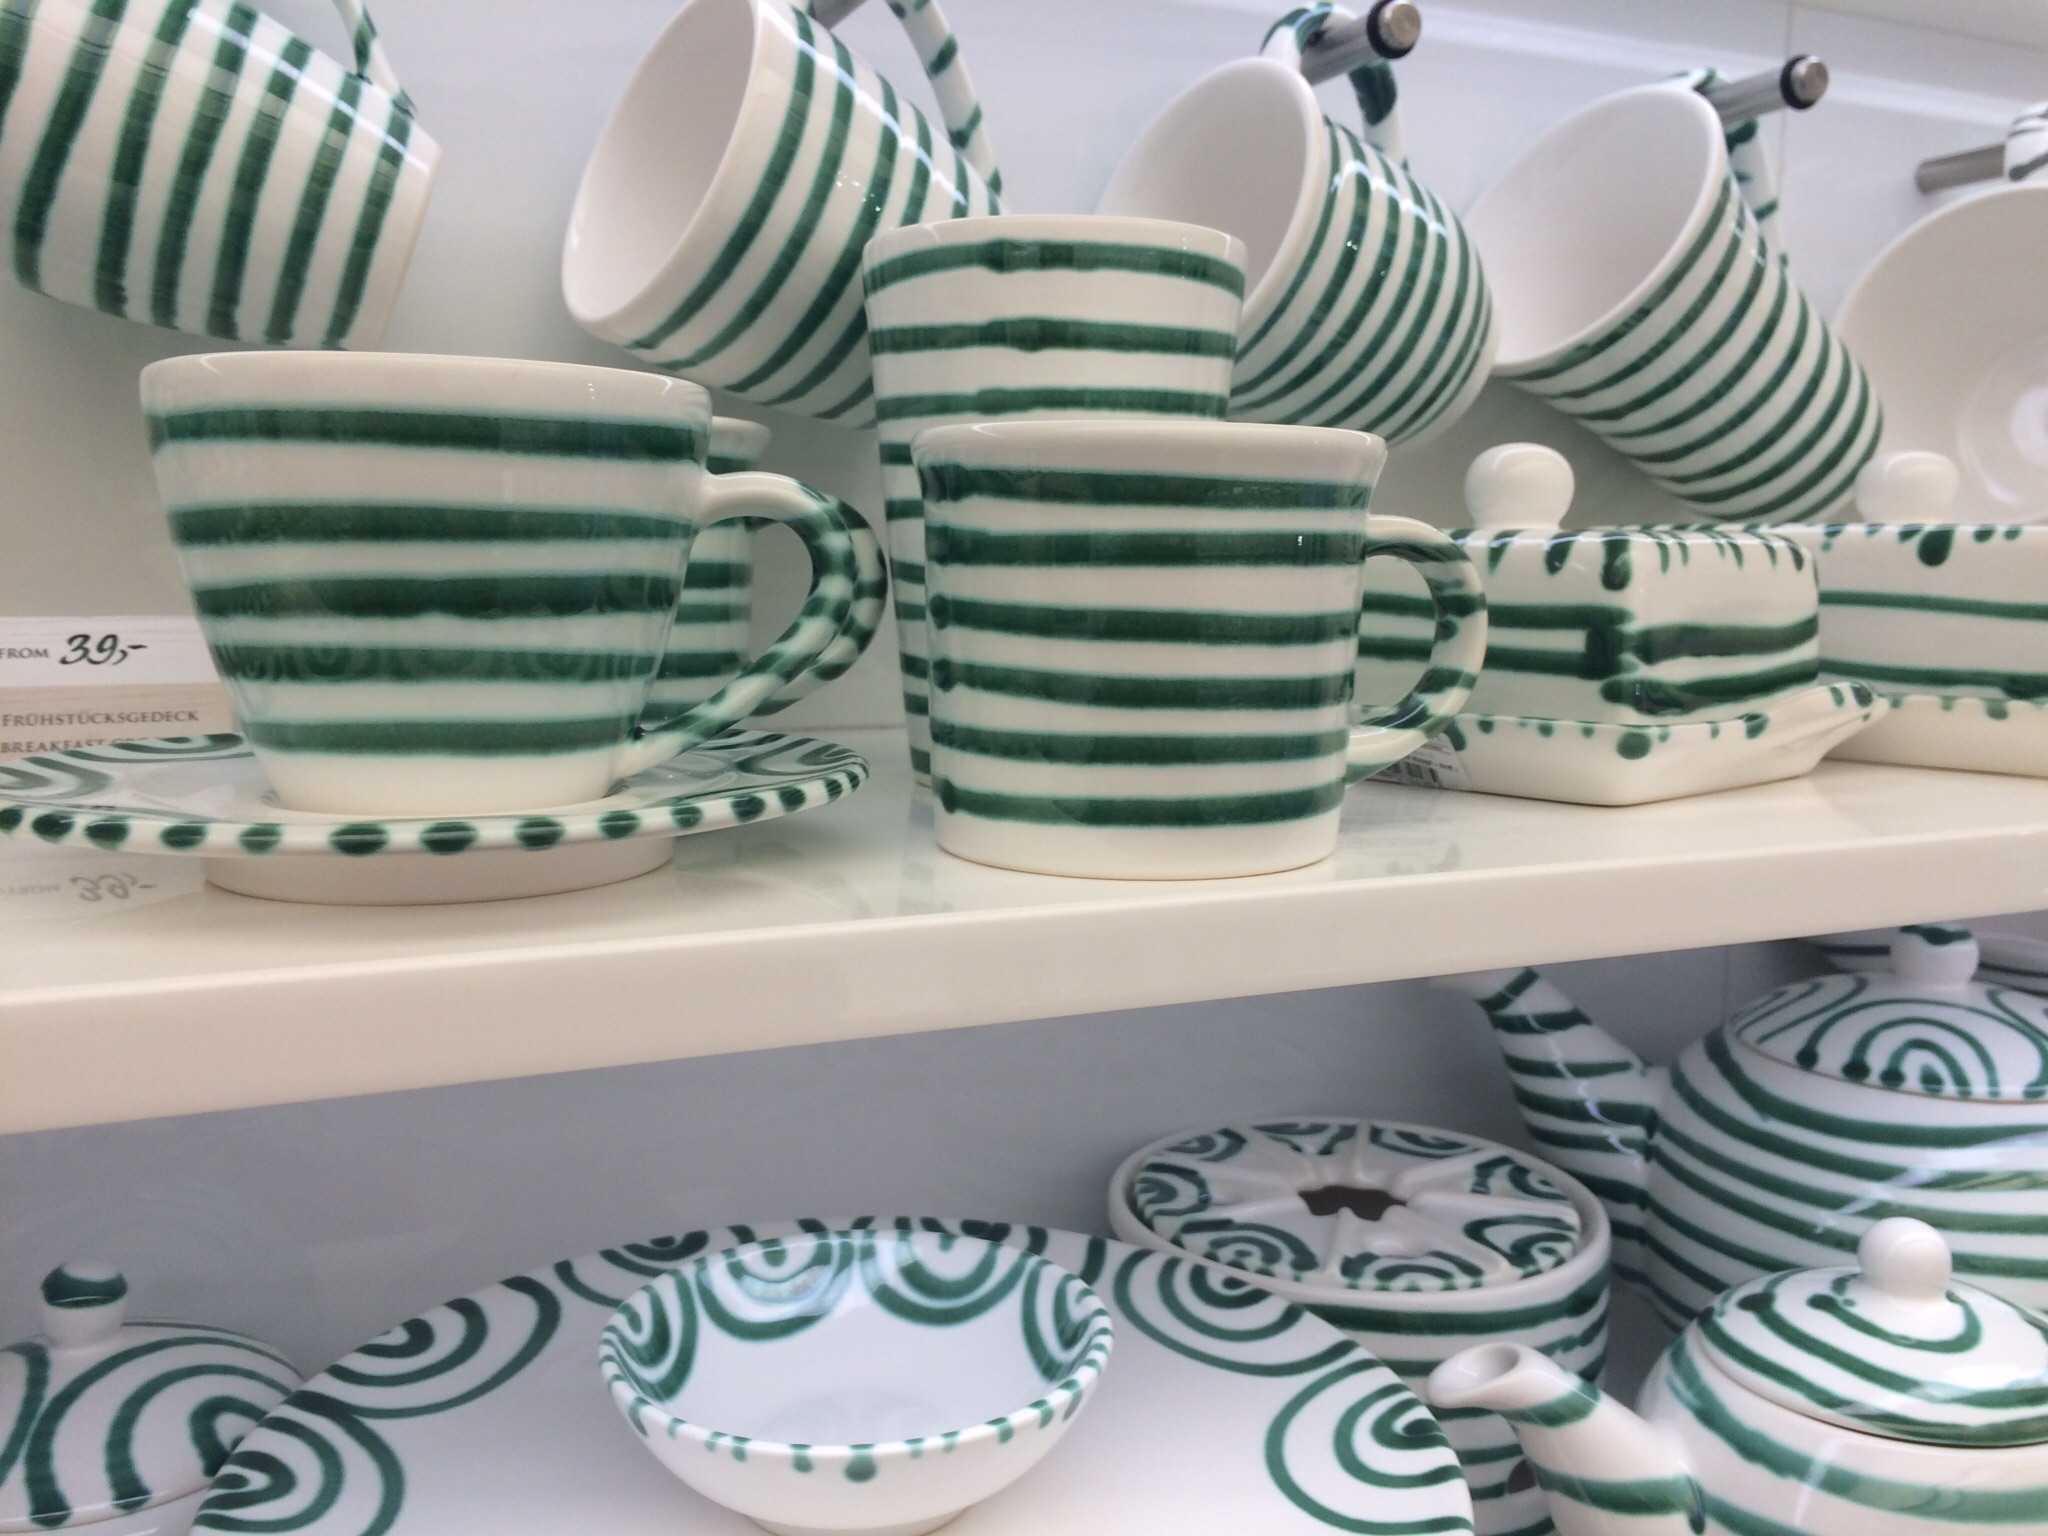 Gmundner Keramik…now that’s a proper souvenir!